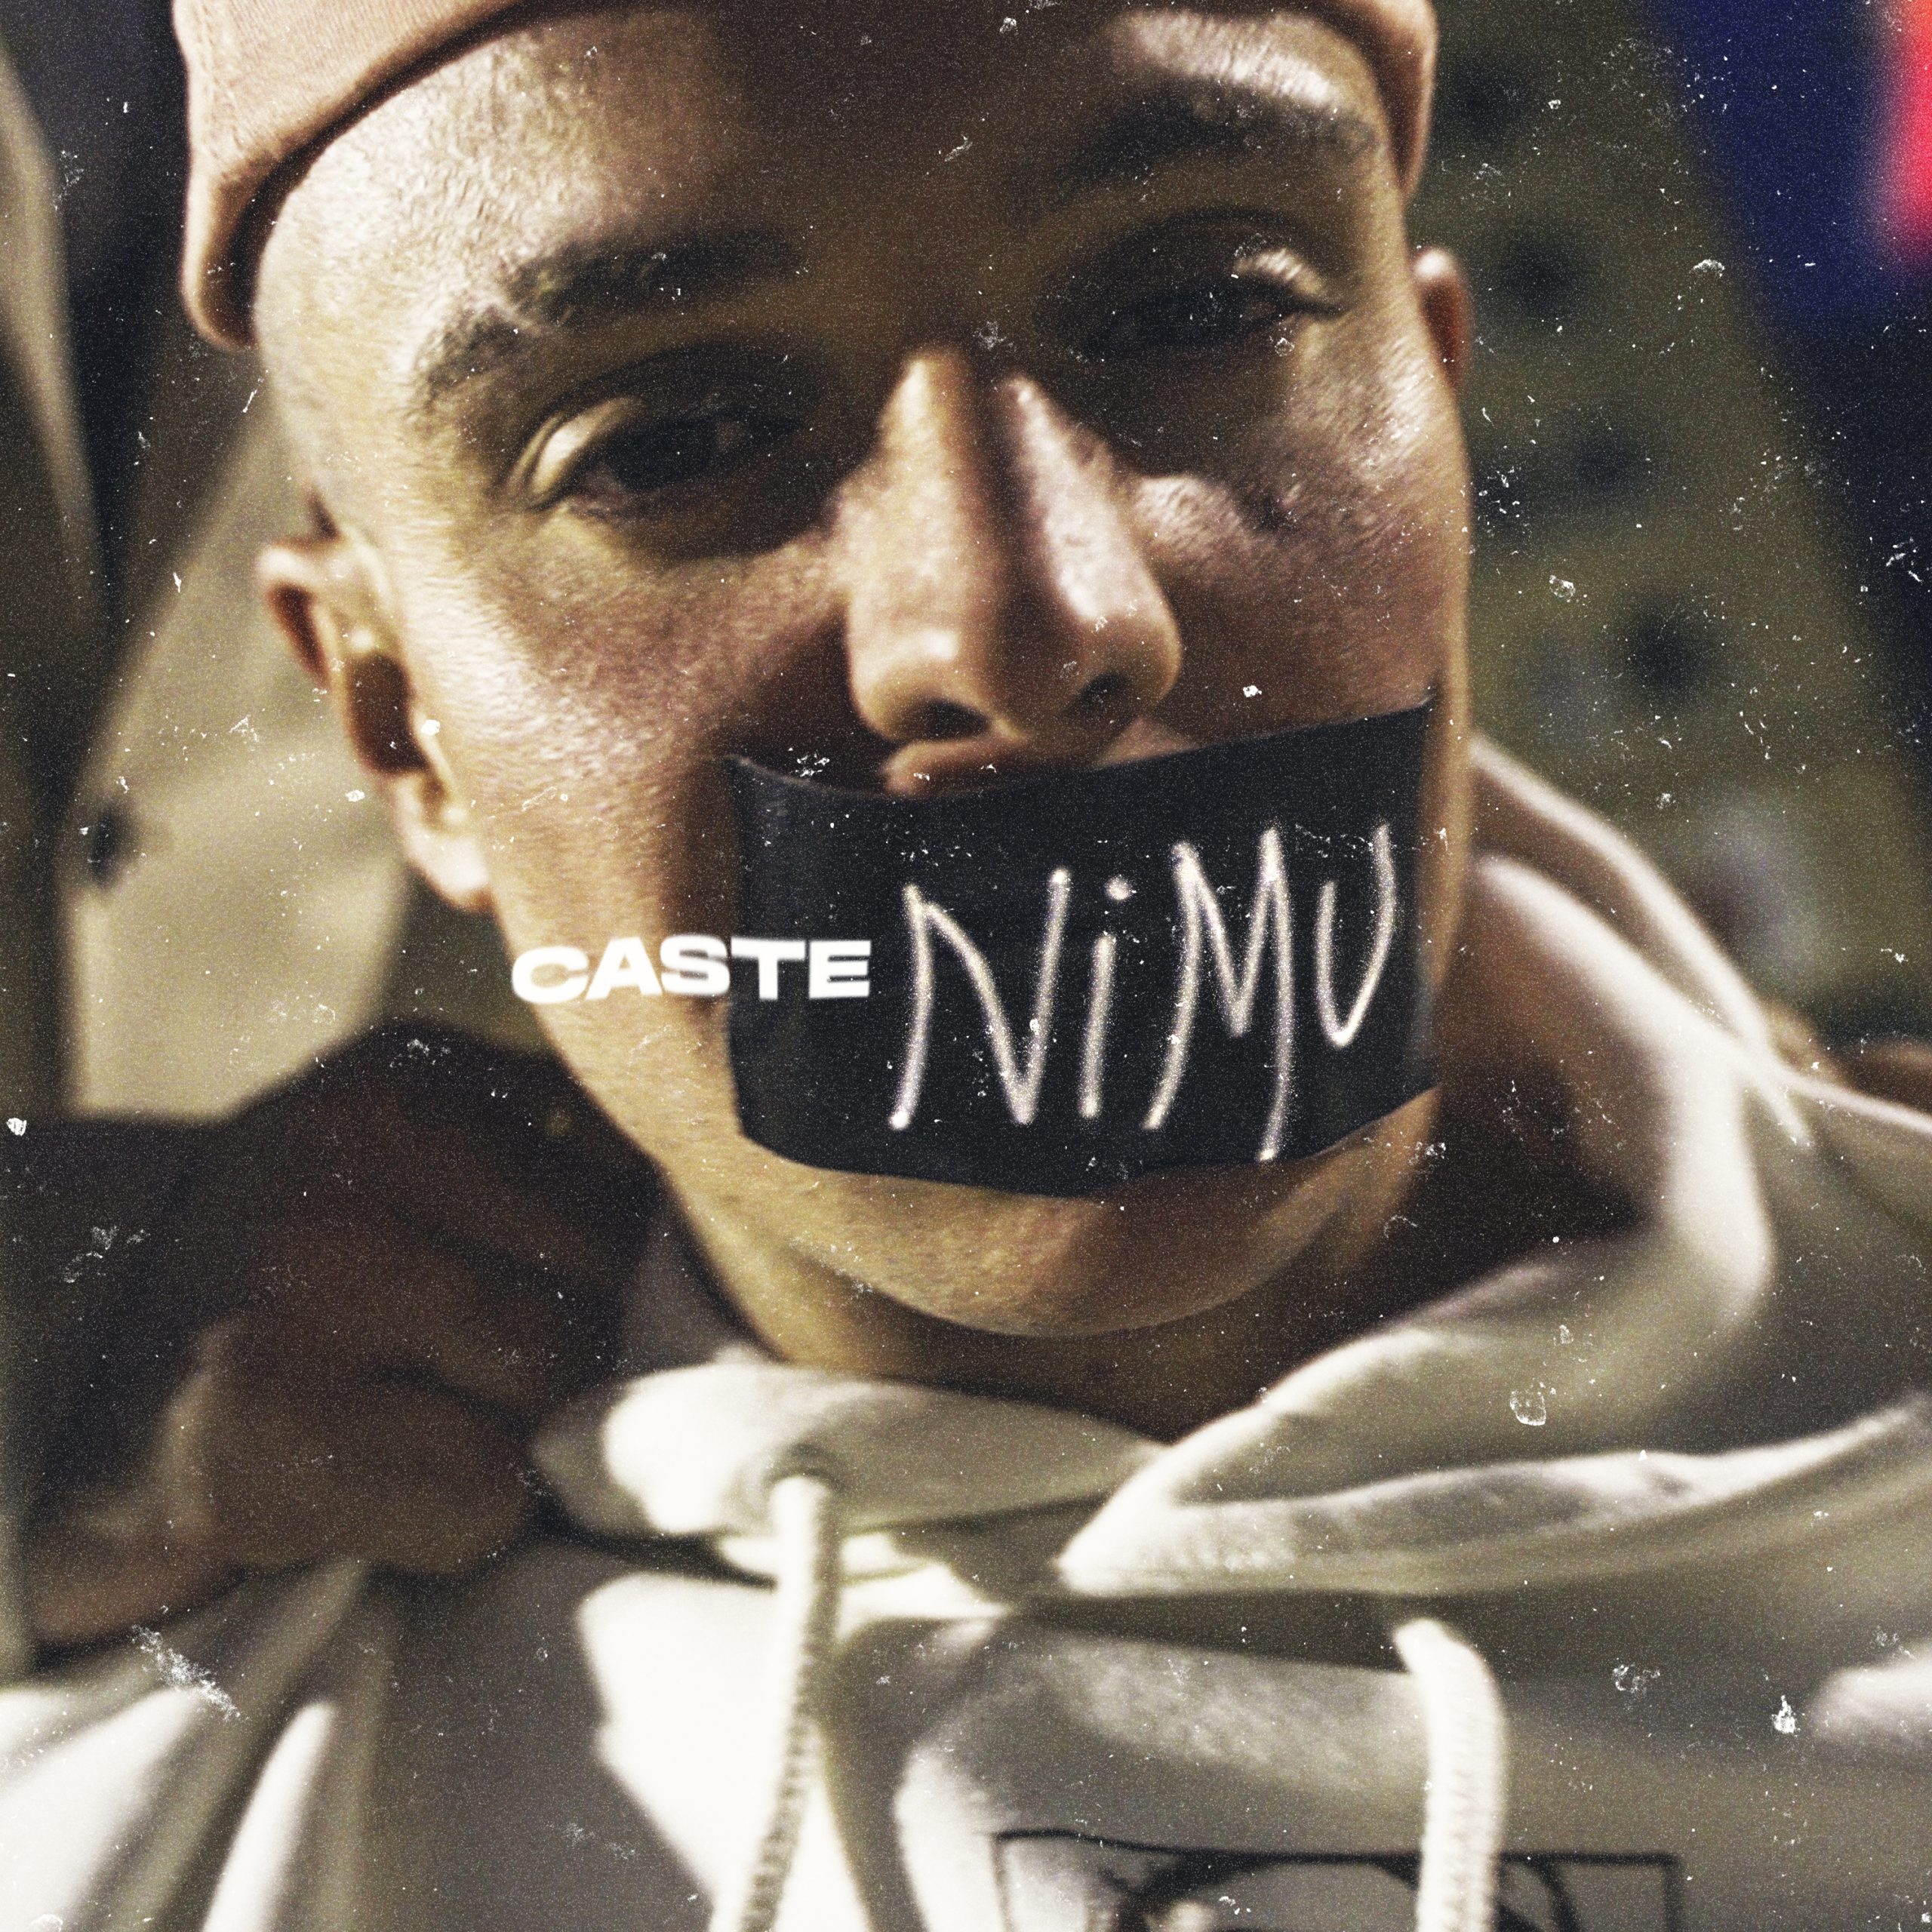 Caste - Ni mú (Video)